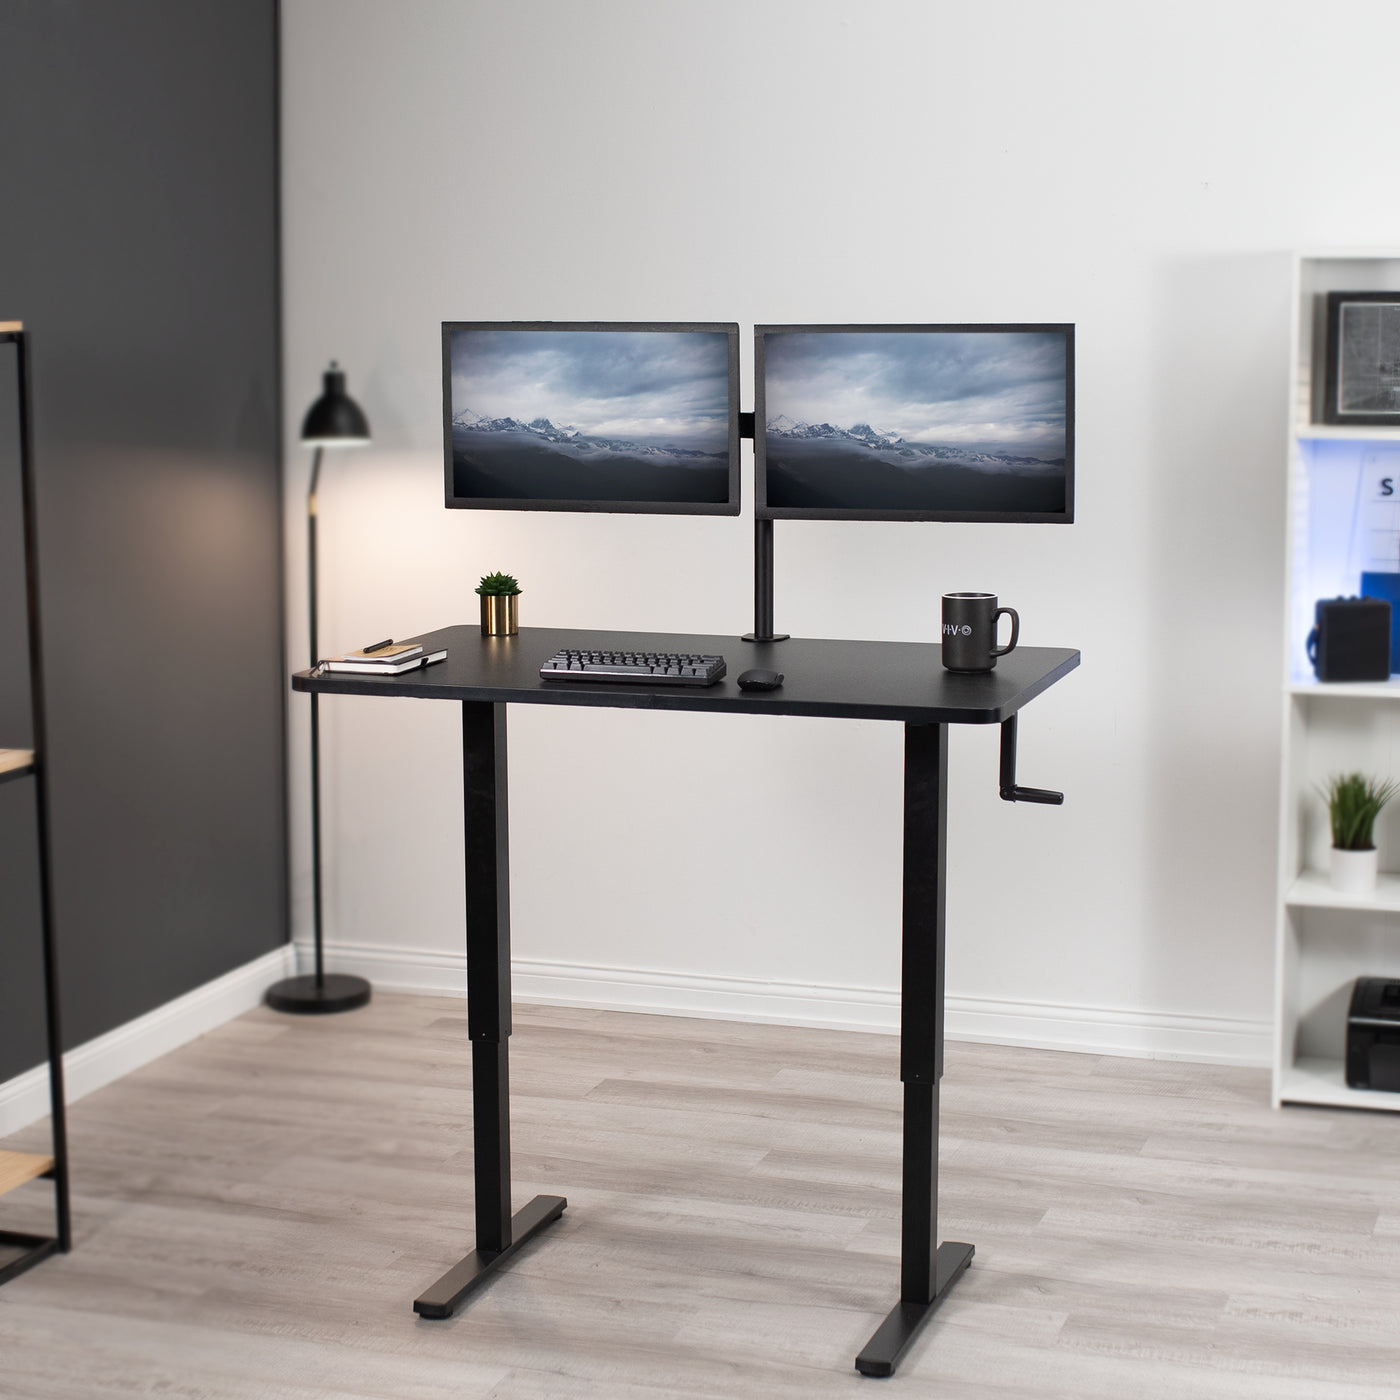 Standing height adjustable ergonomic desk with manual height adjustment